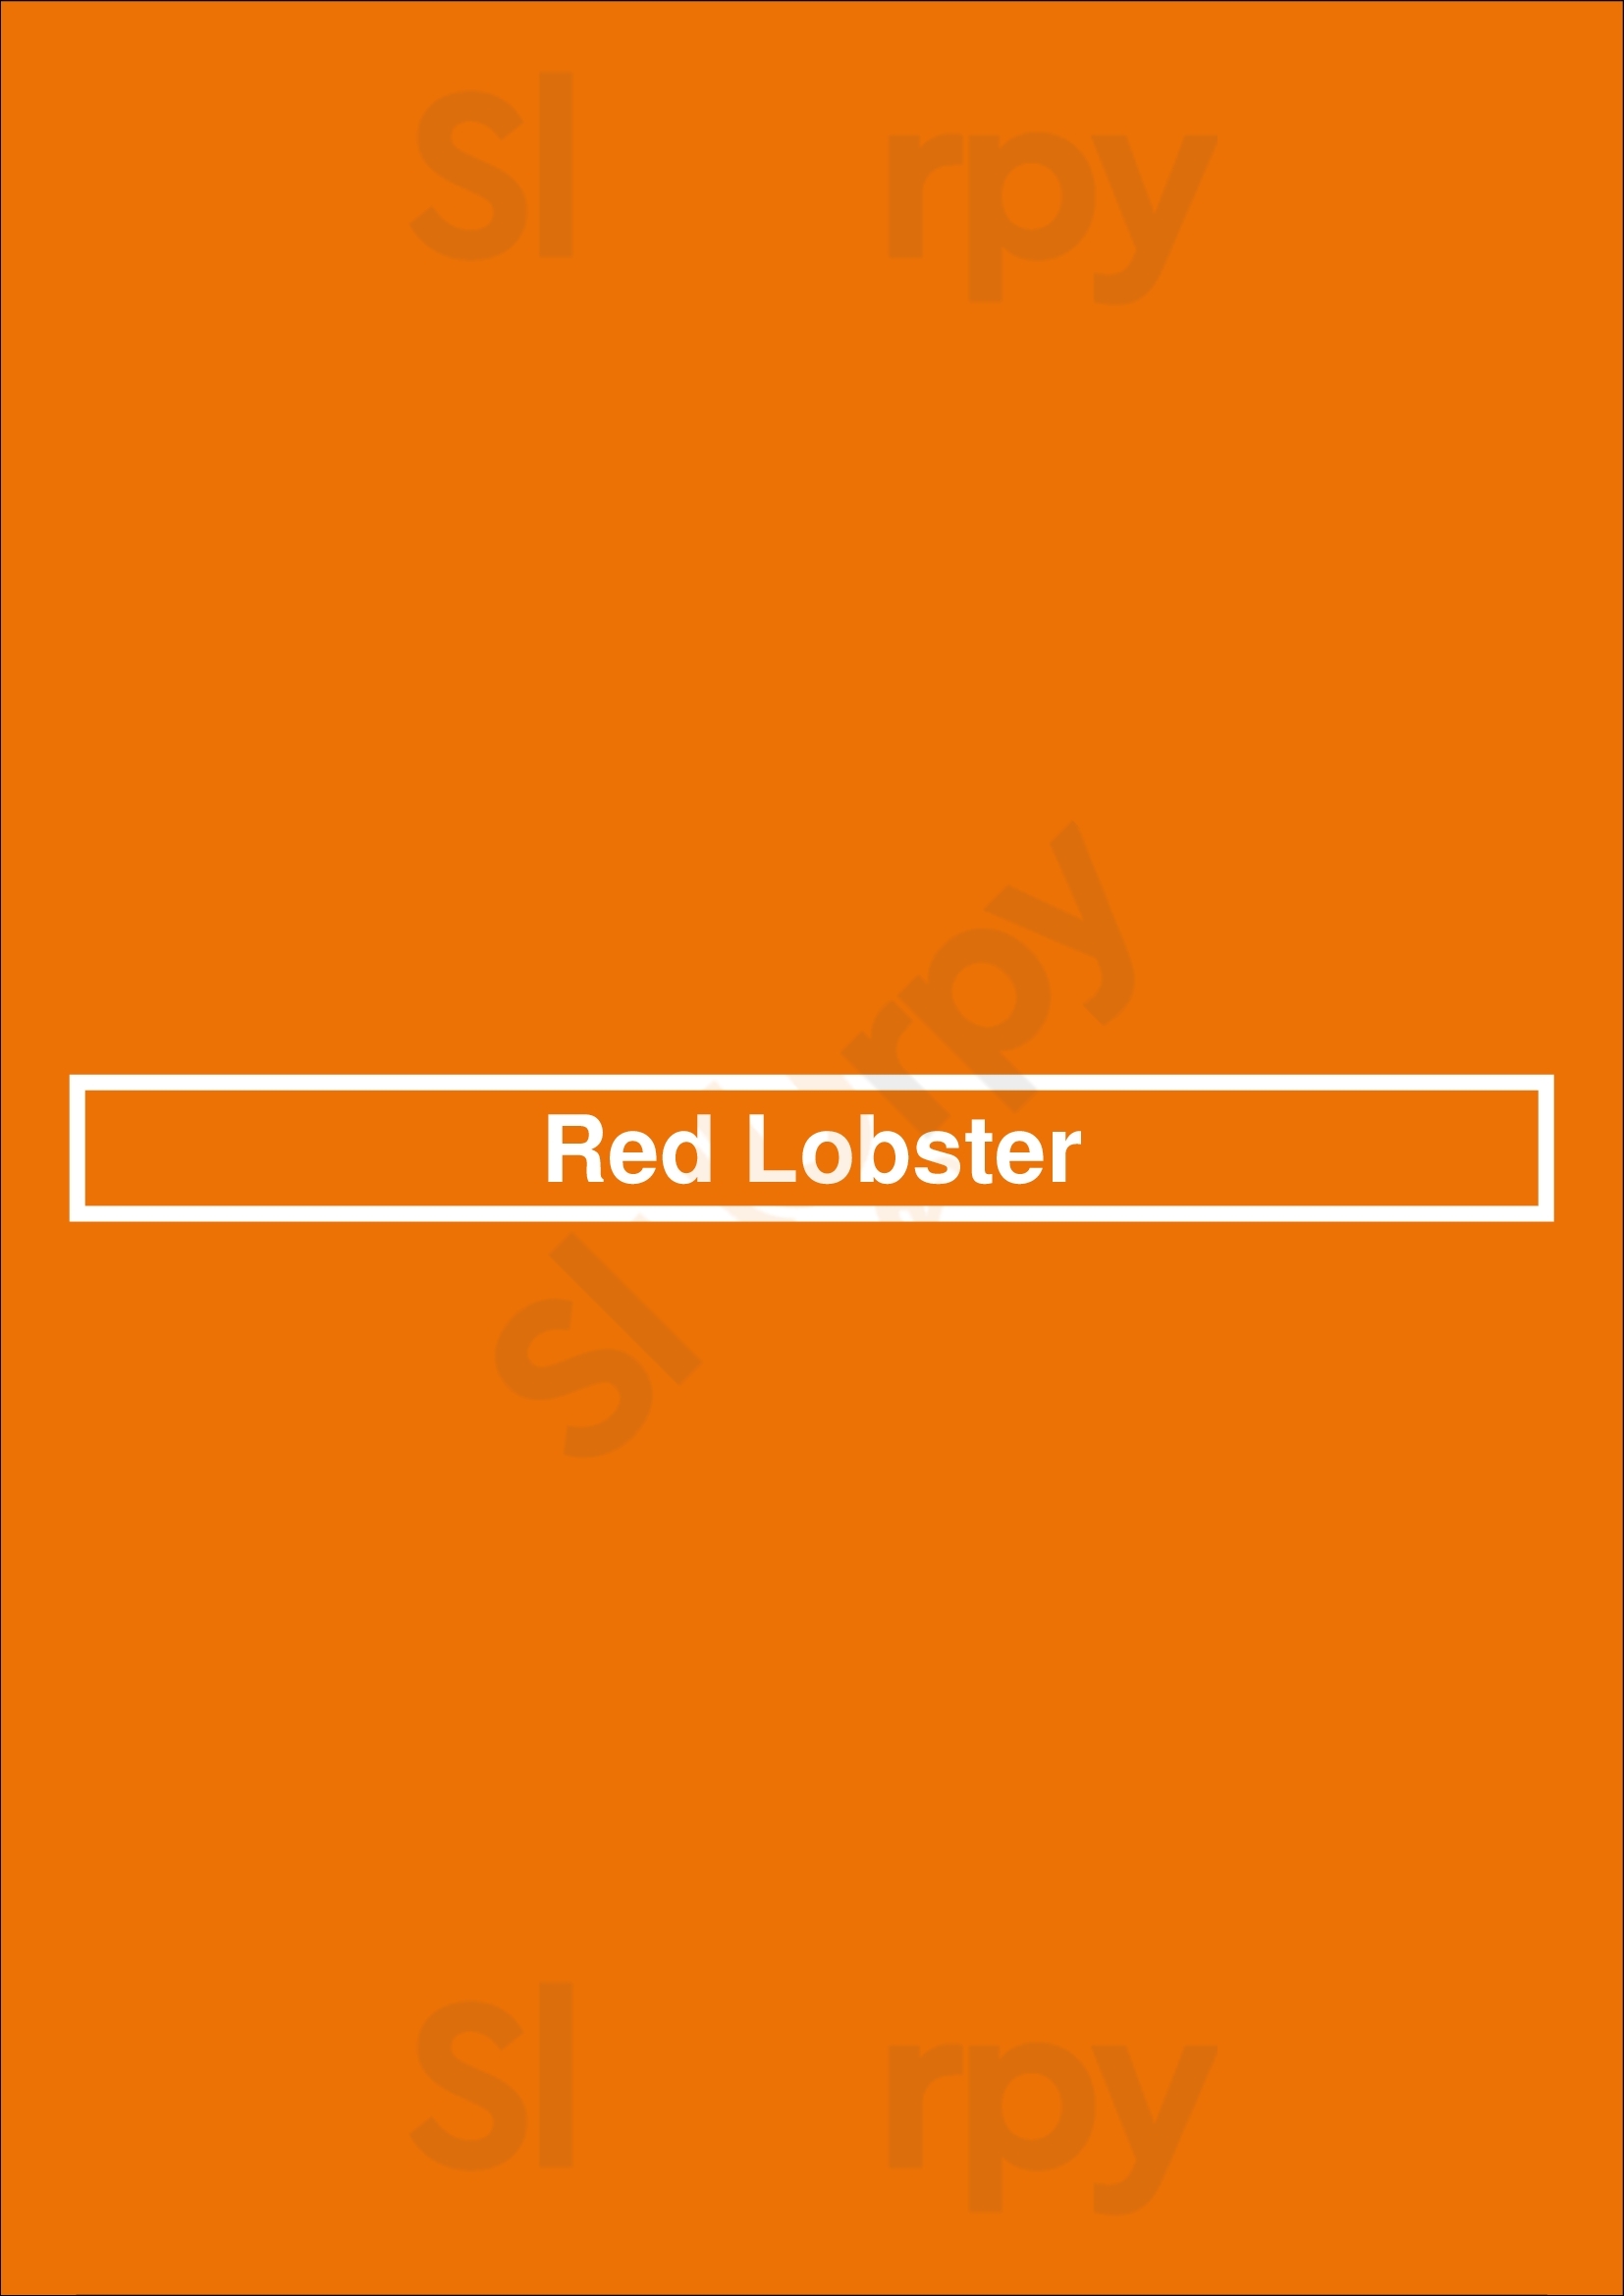 Red Lobster Fayetteville Menu - 1